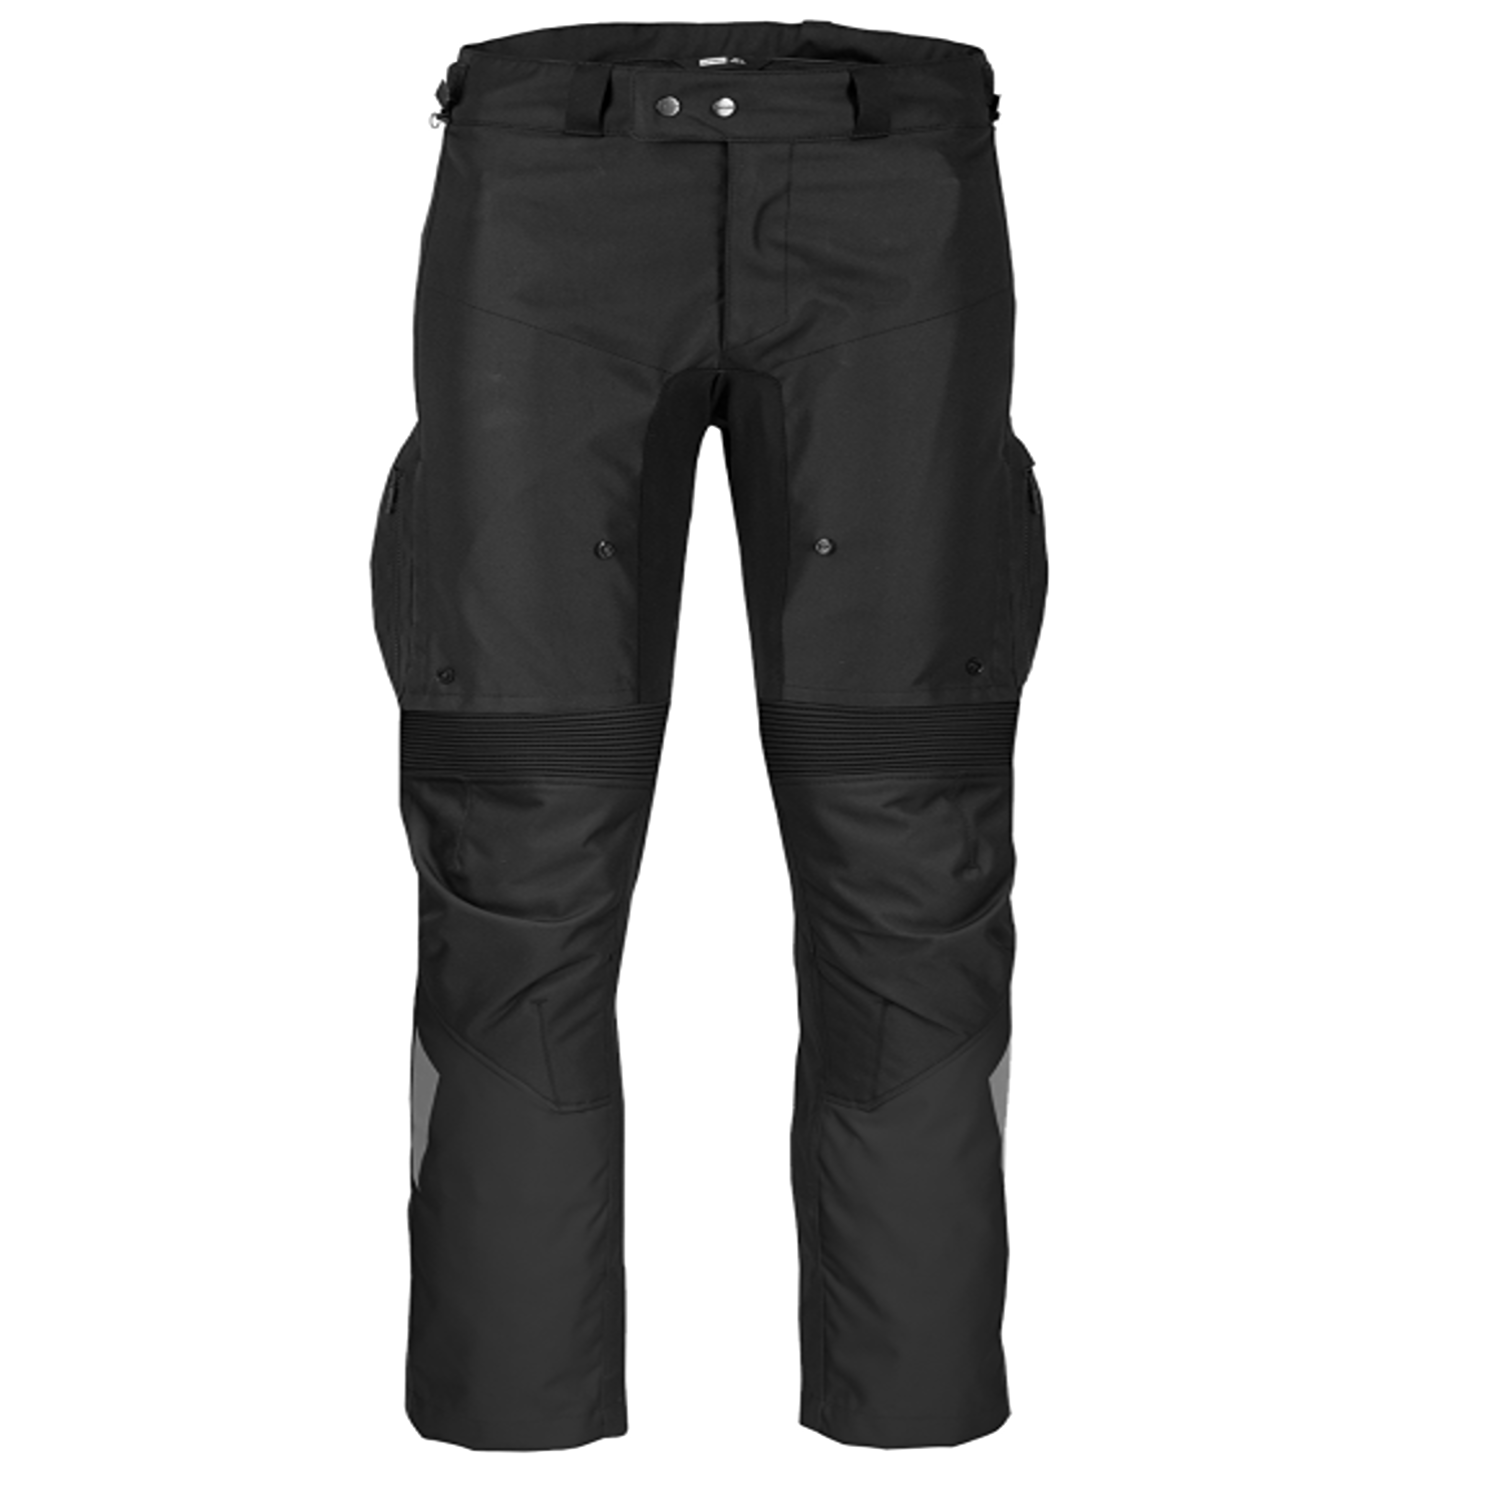 Image of EU Spidi Crossmaster Short Pants Black Taille 3XL